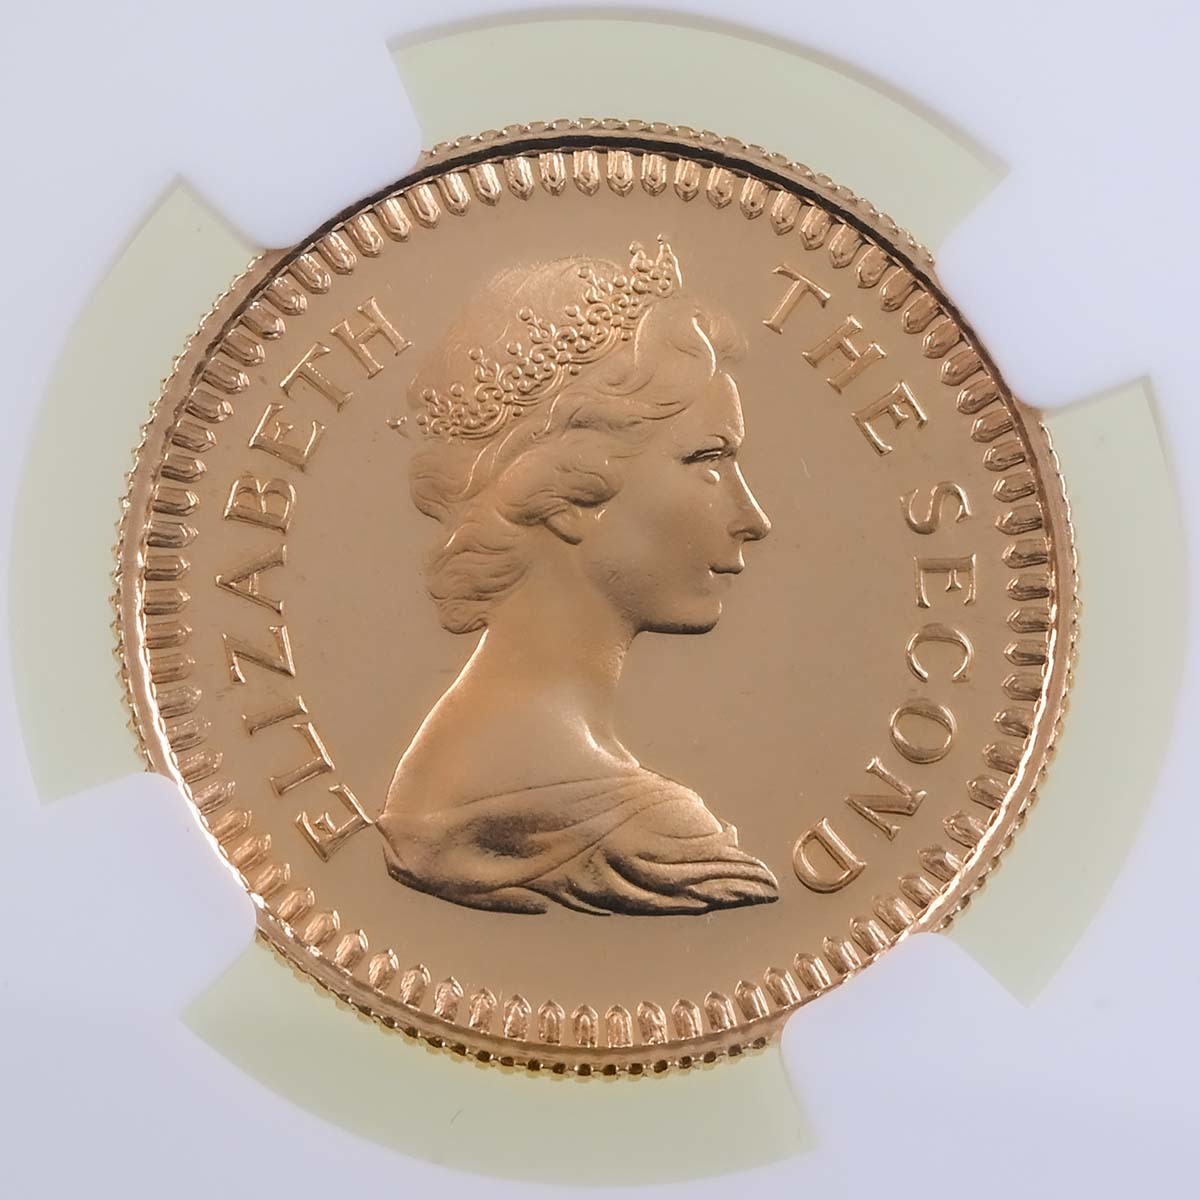 1966 Rhodesia Gold £1 PF 67 Ultra Cameo Obverse